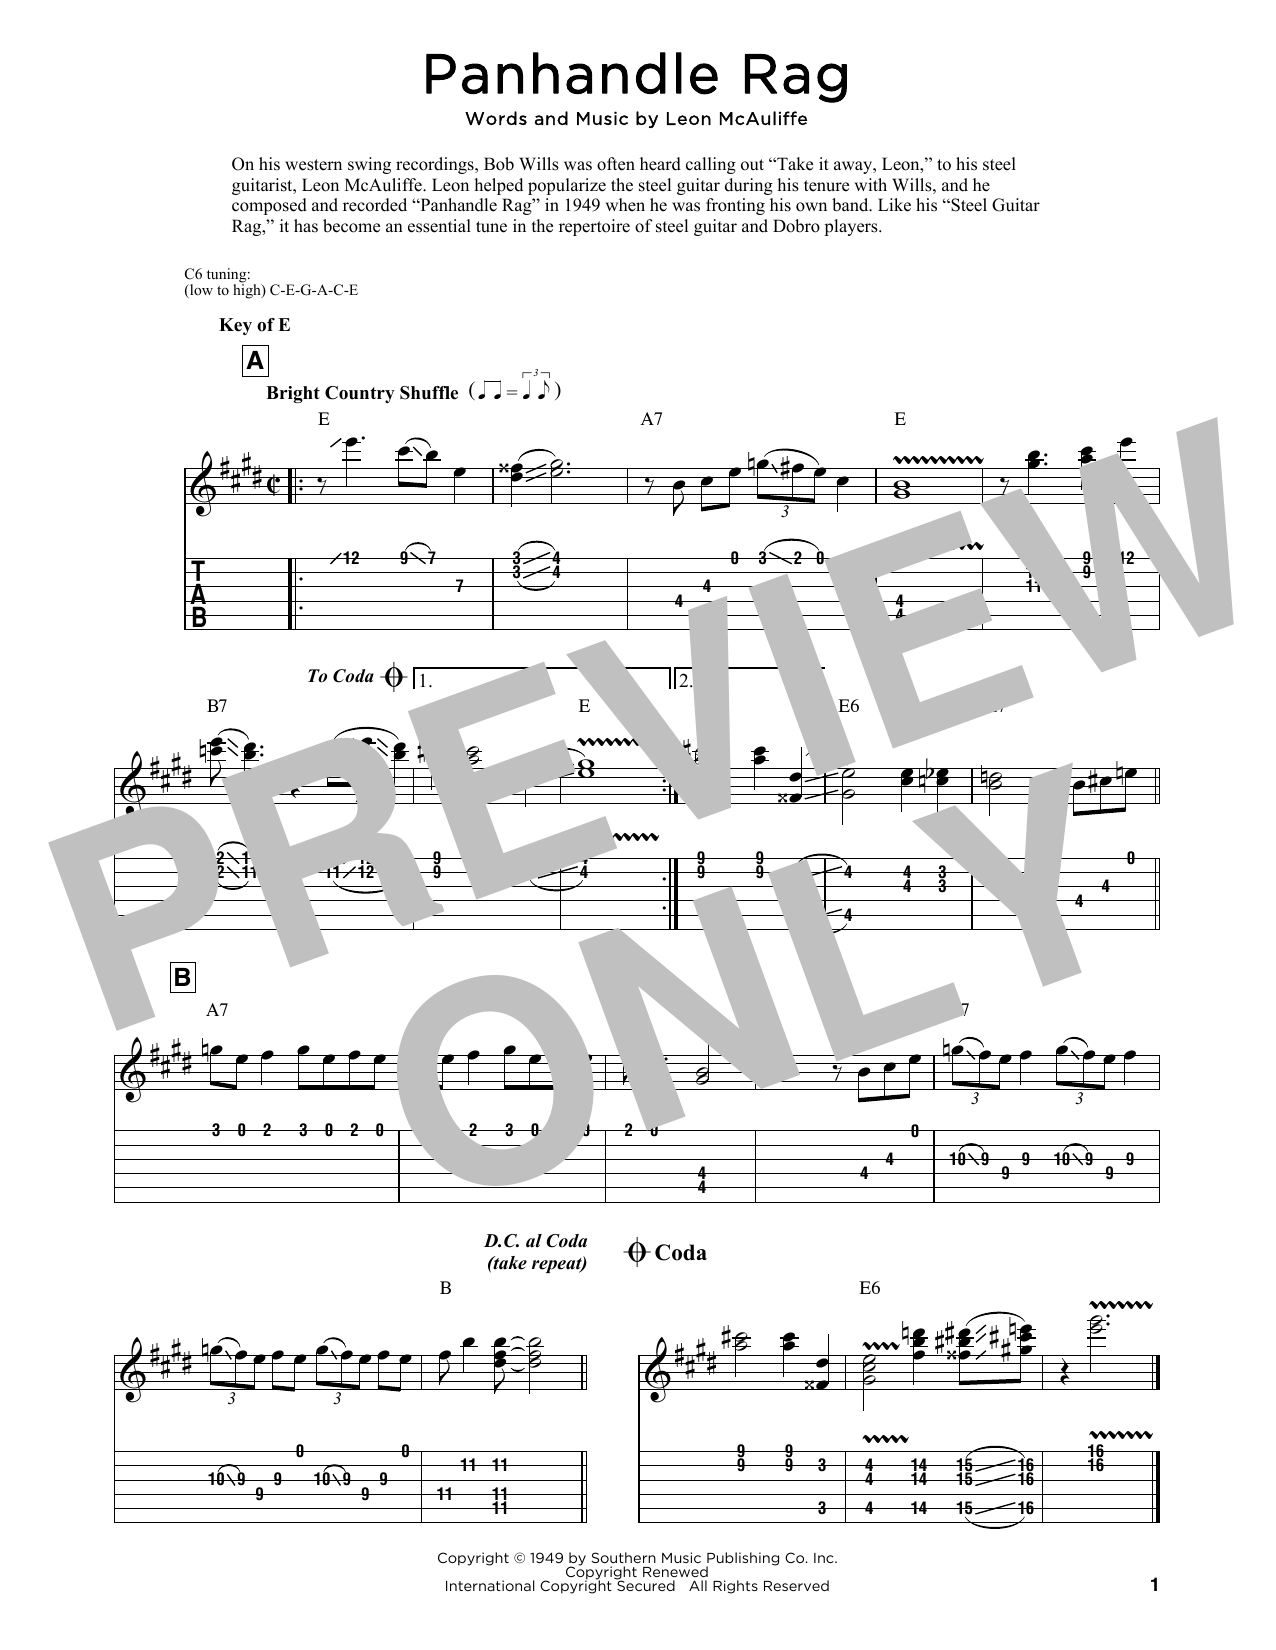 Leon McAuliffe Panhandle Rag Sheet Music Notes & Chords for Dobro - Download or Print PDF